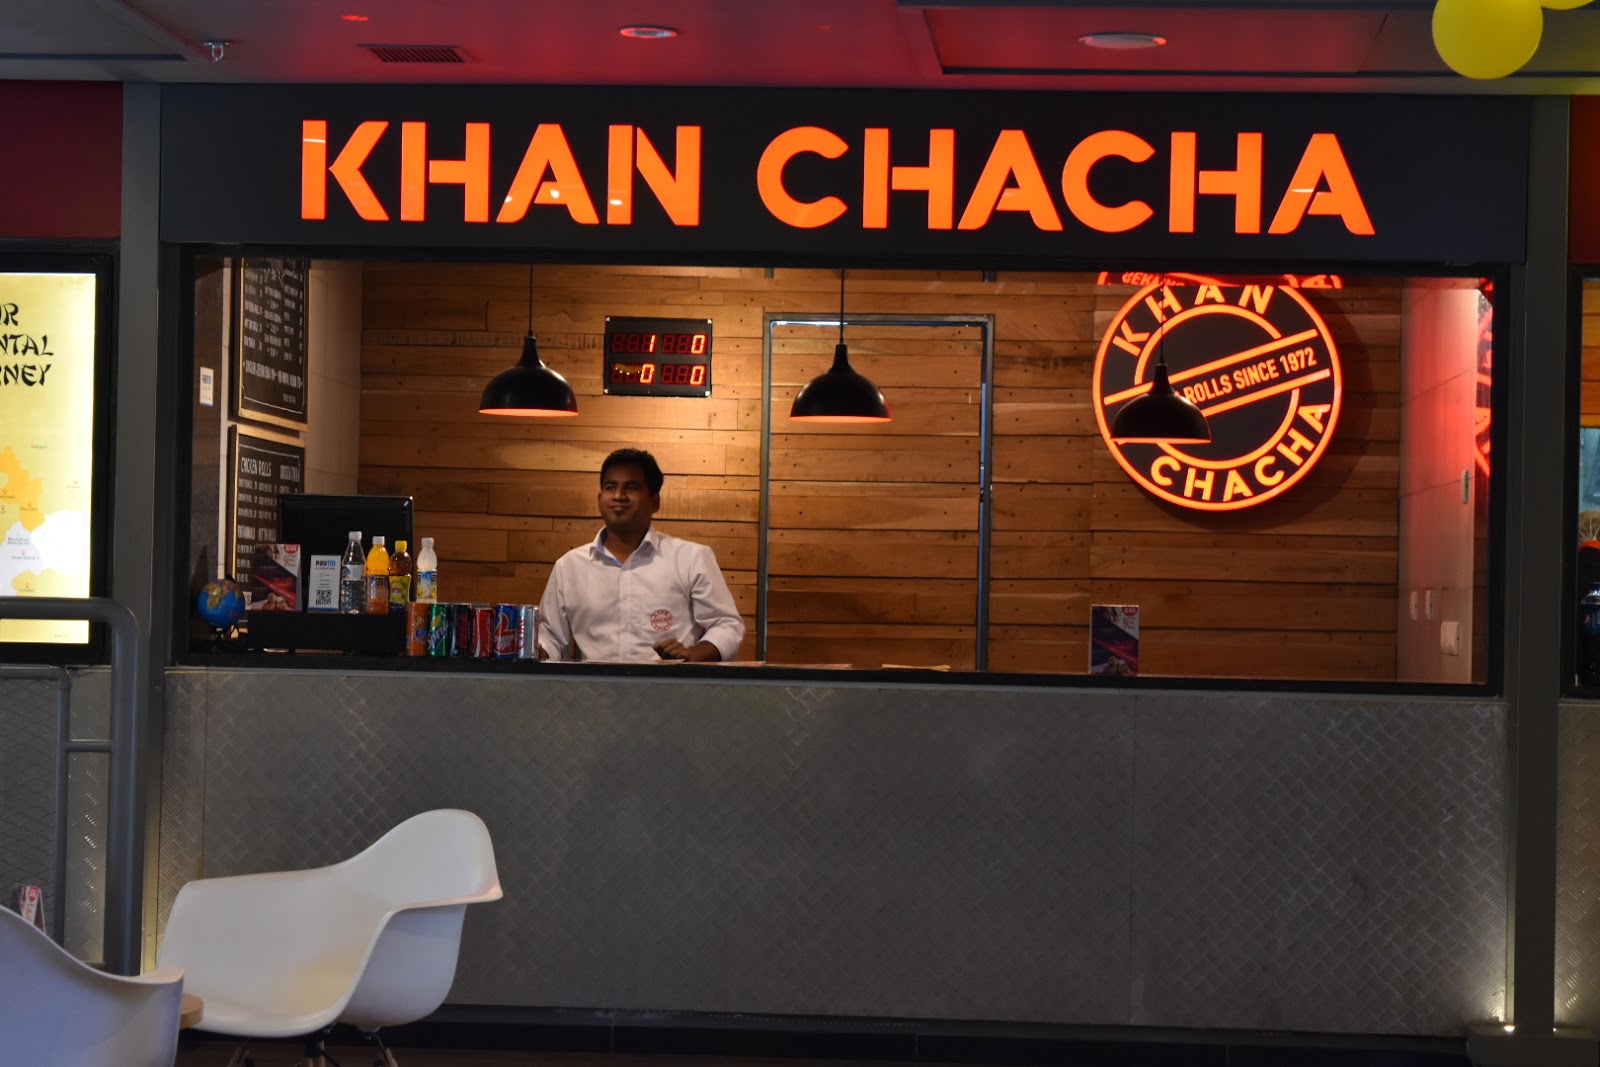 Khan Chacha